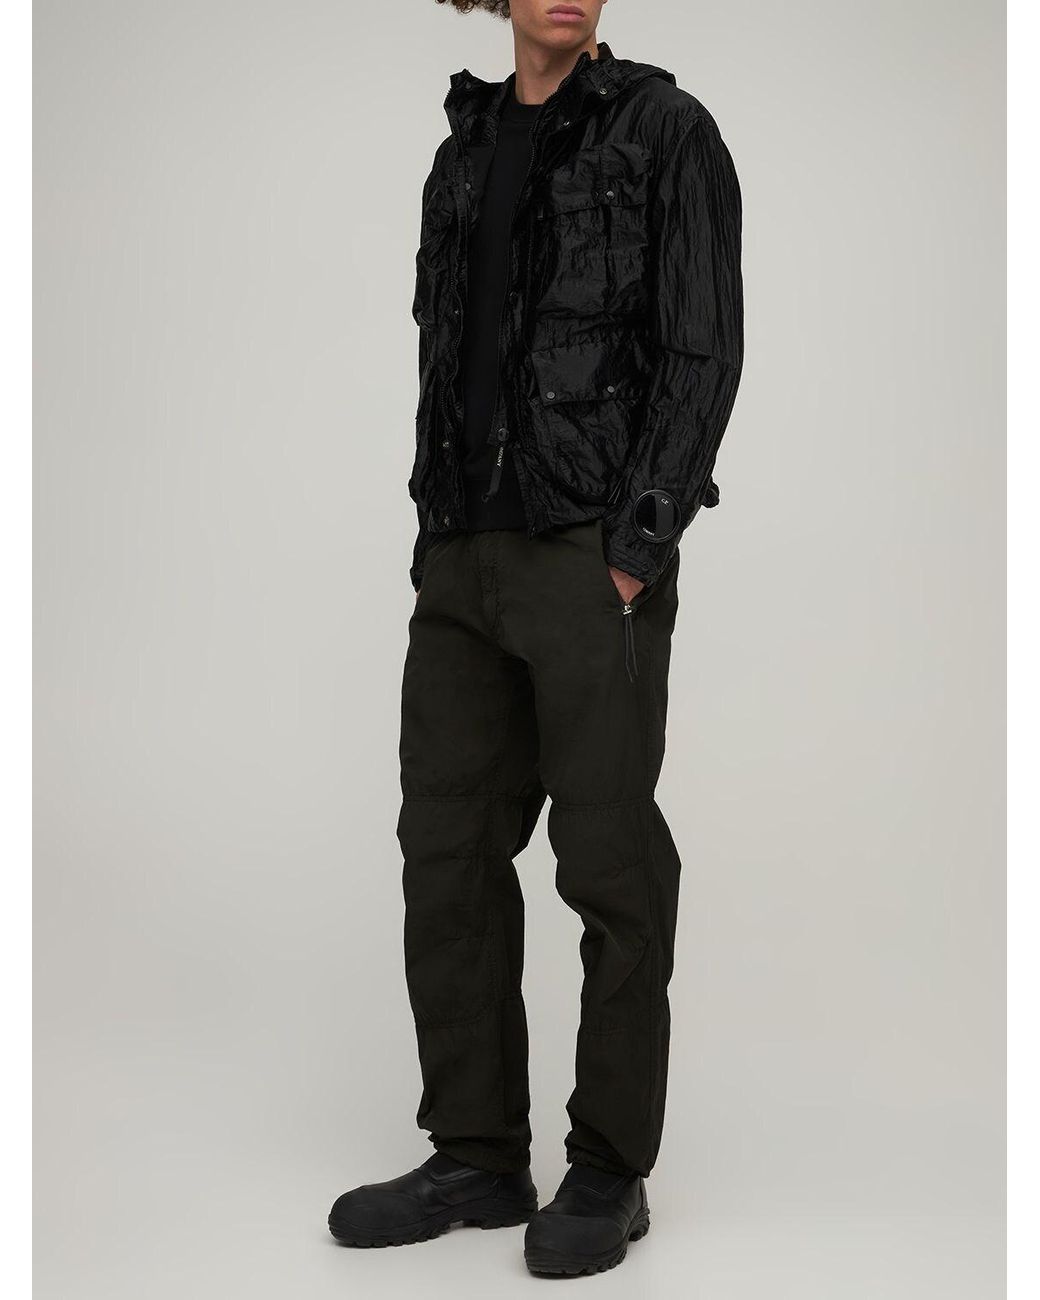 C.P. Company Kan-d La Mille Nylon Jacket in Black for Men | Lyst